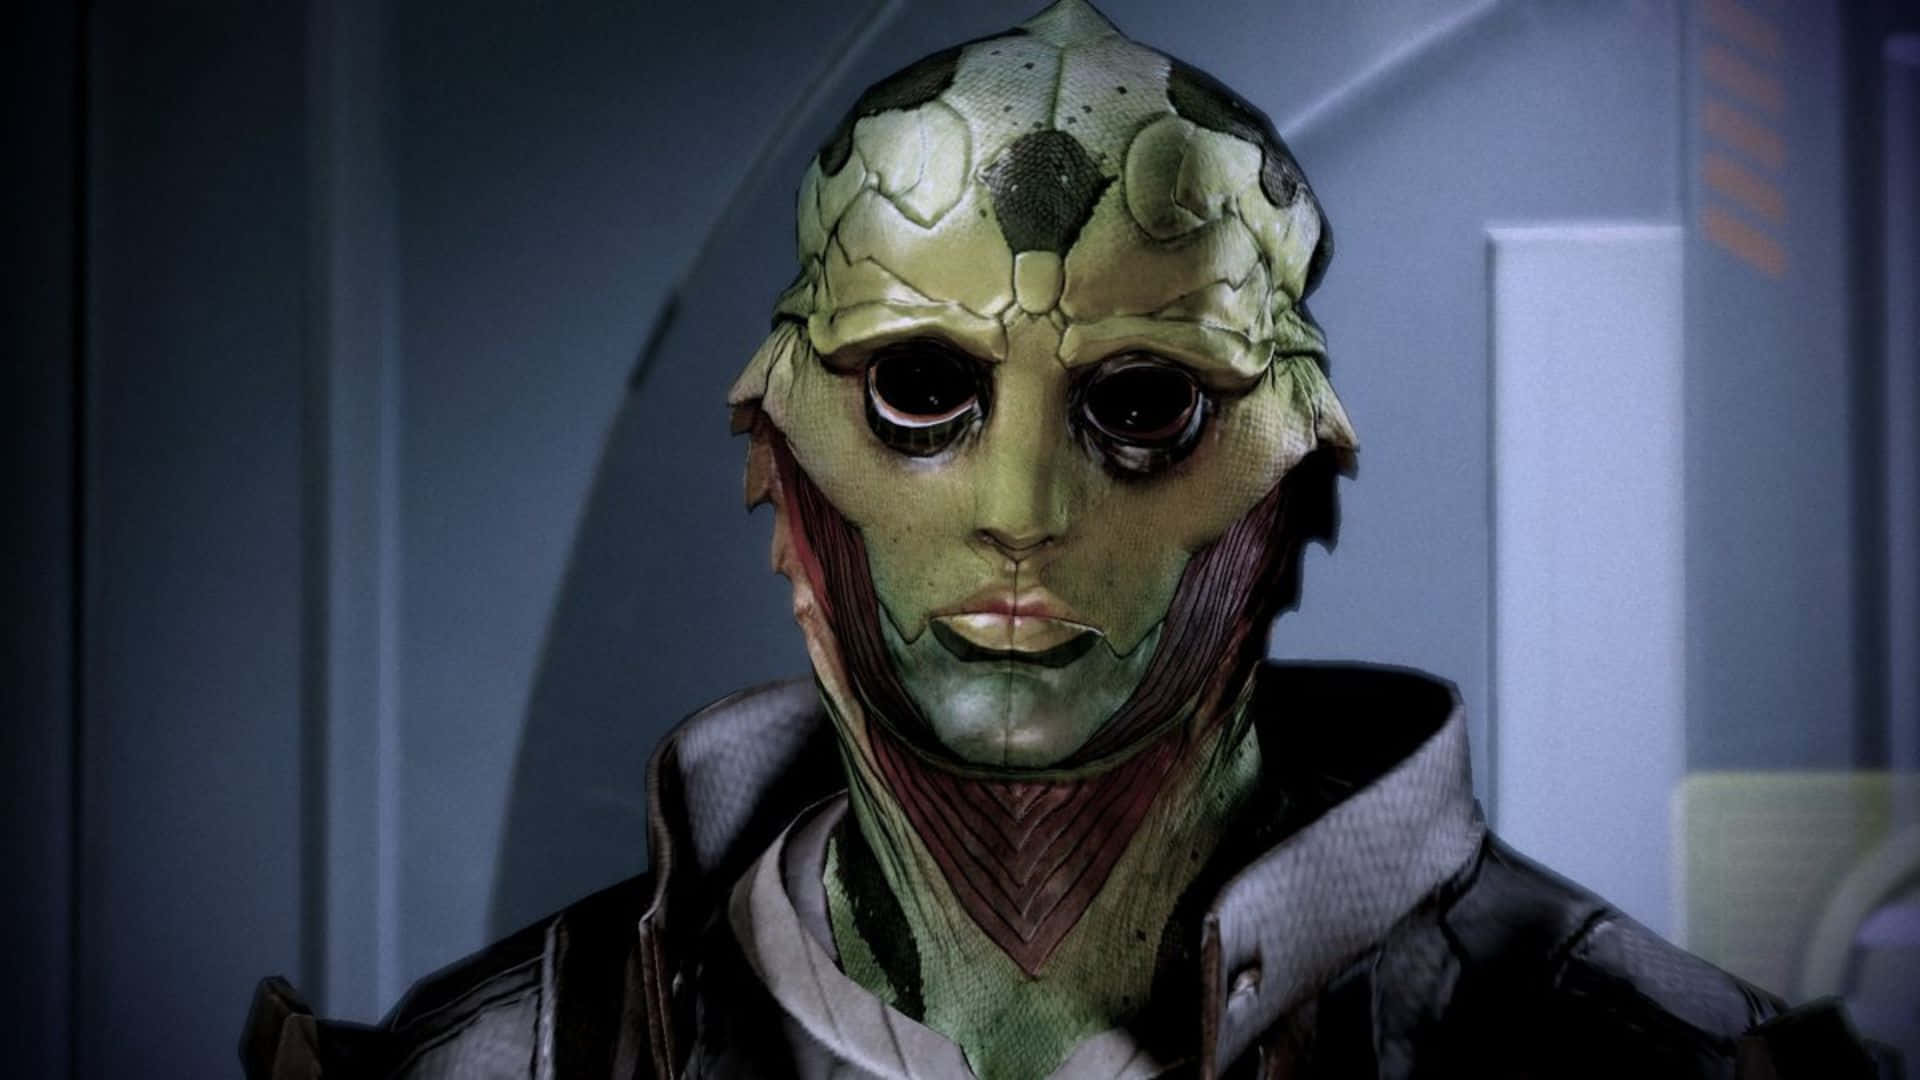 Thane Krios - The Deadly Assassin of Mass Effect Wallpaper